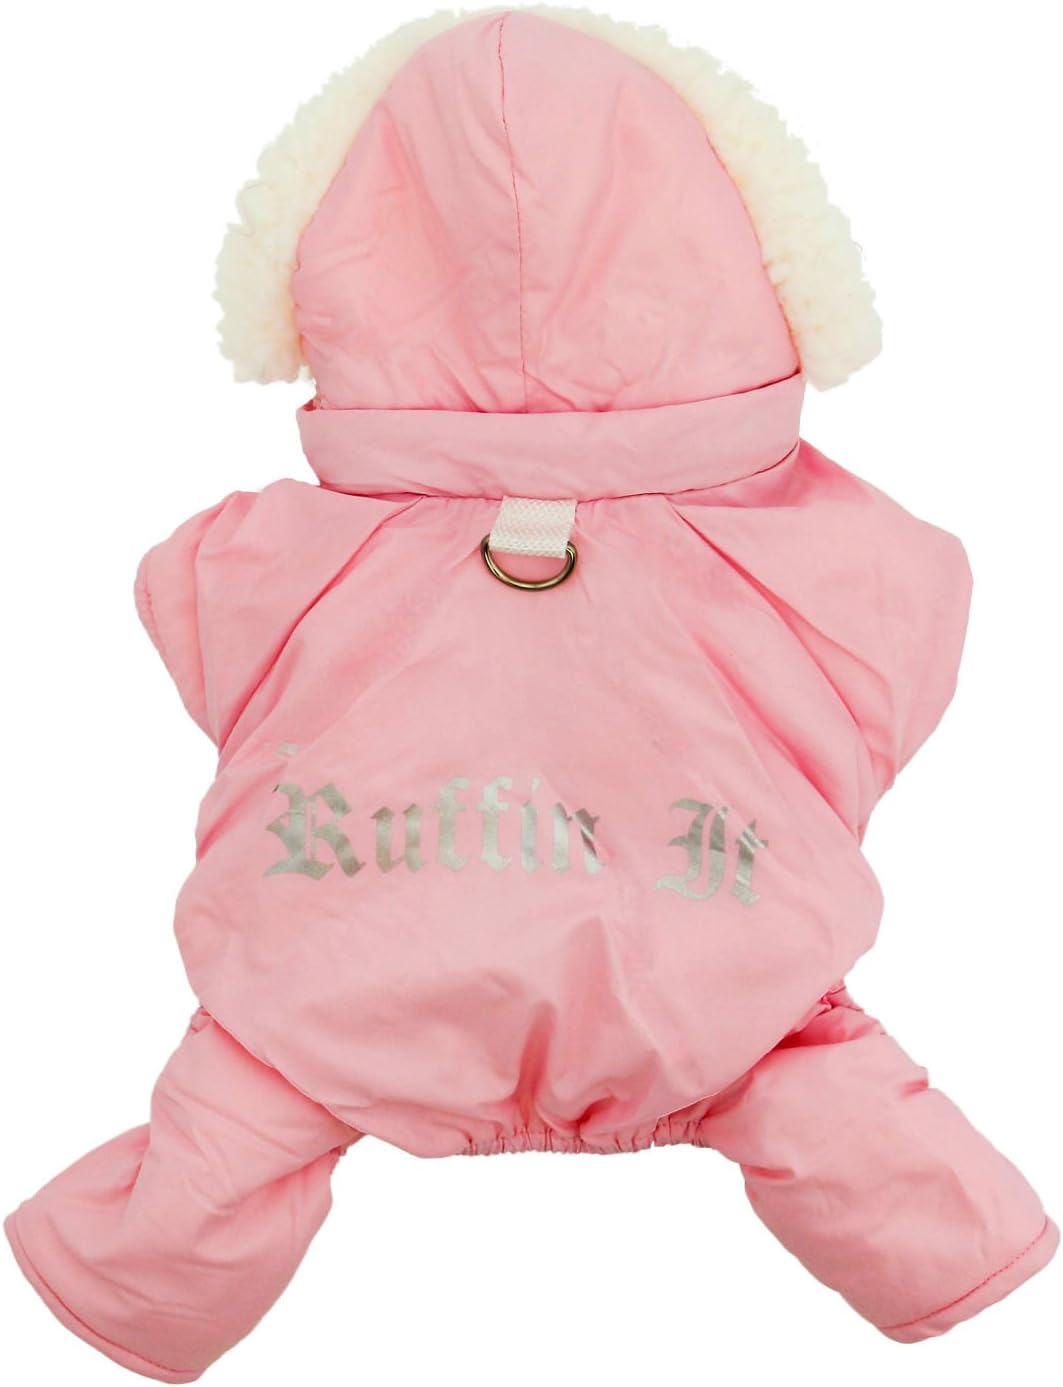 Doggie Design "Ruffin' It" Snowsuit - Pink - Small/Medium (S/M)